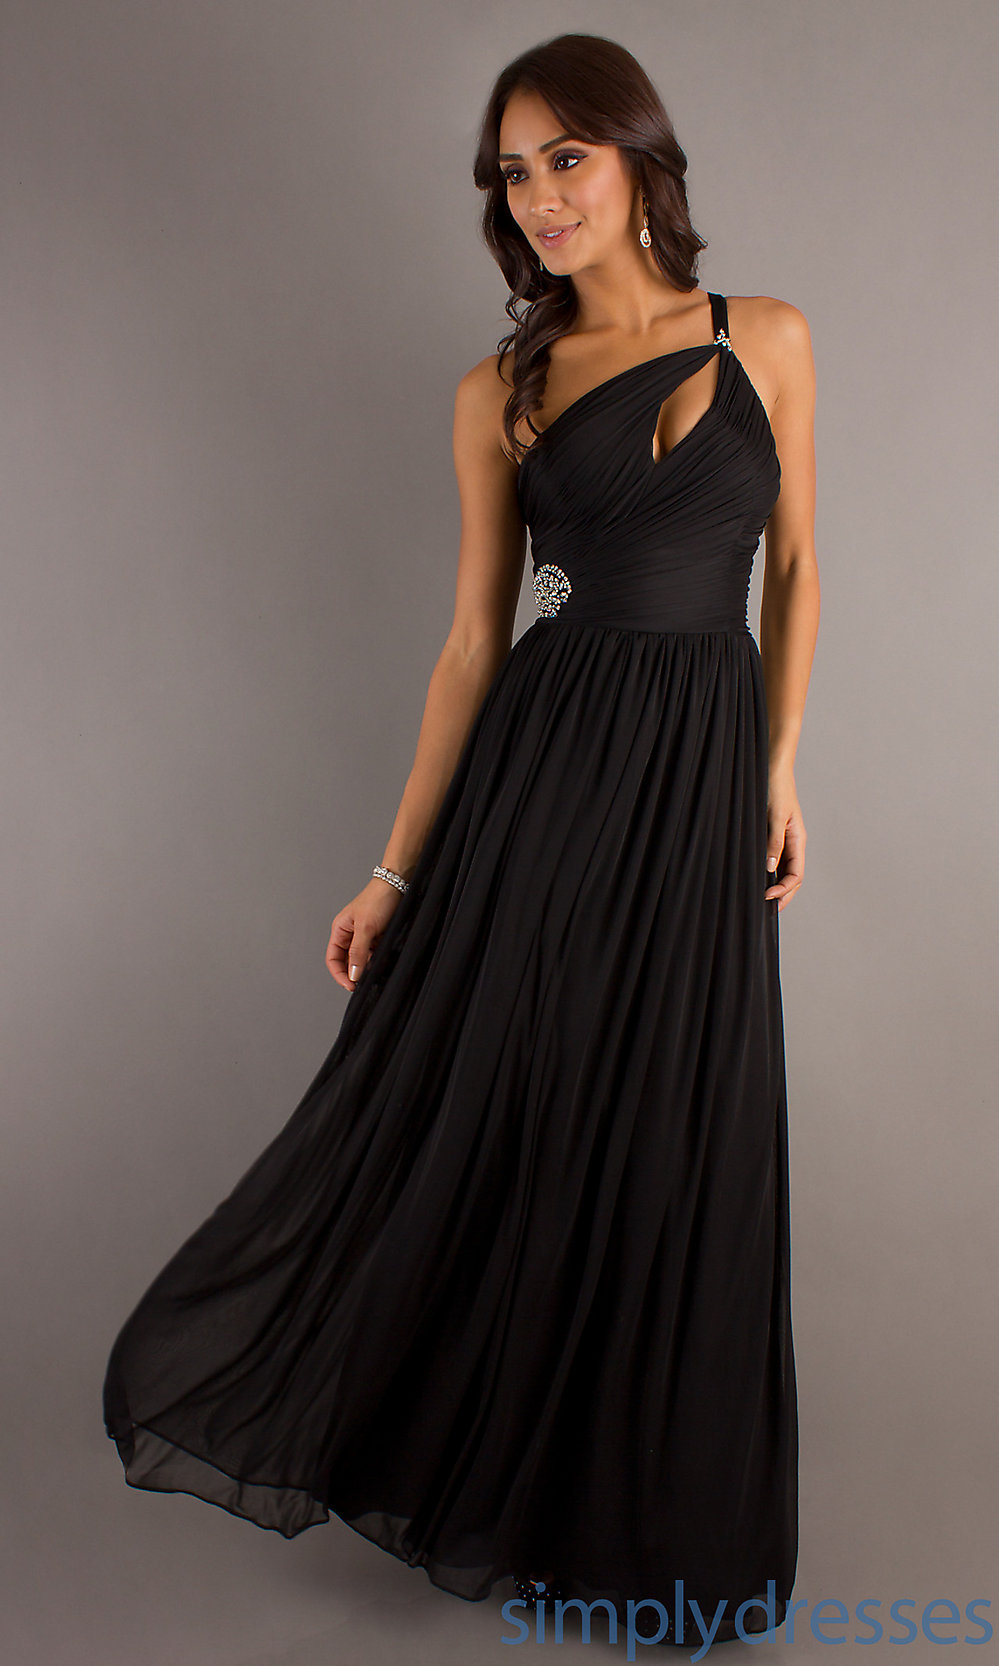 Long Black Elegant Evening Dresses – Make You Look Like A Princess ...